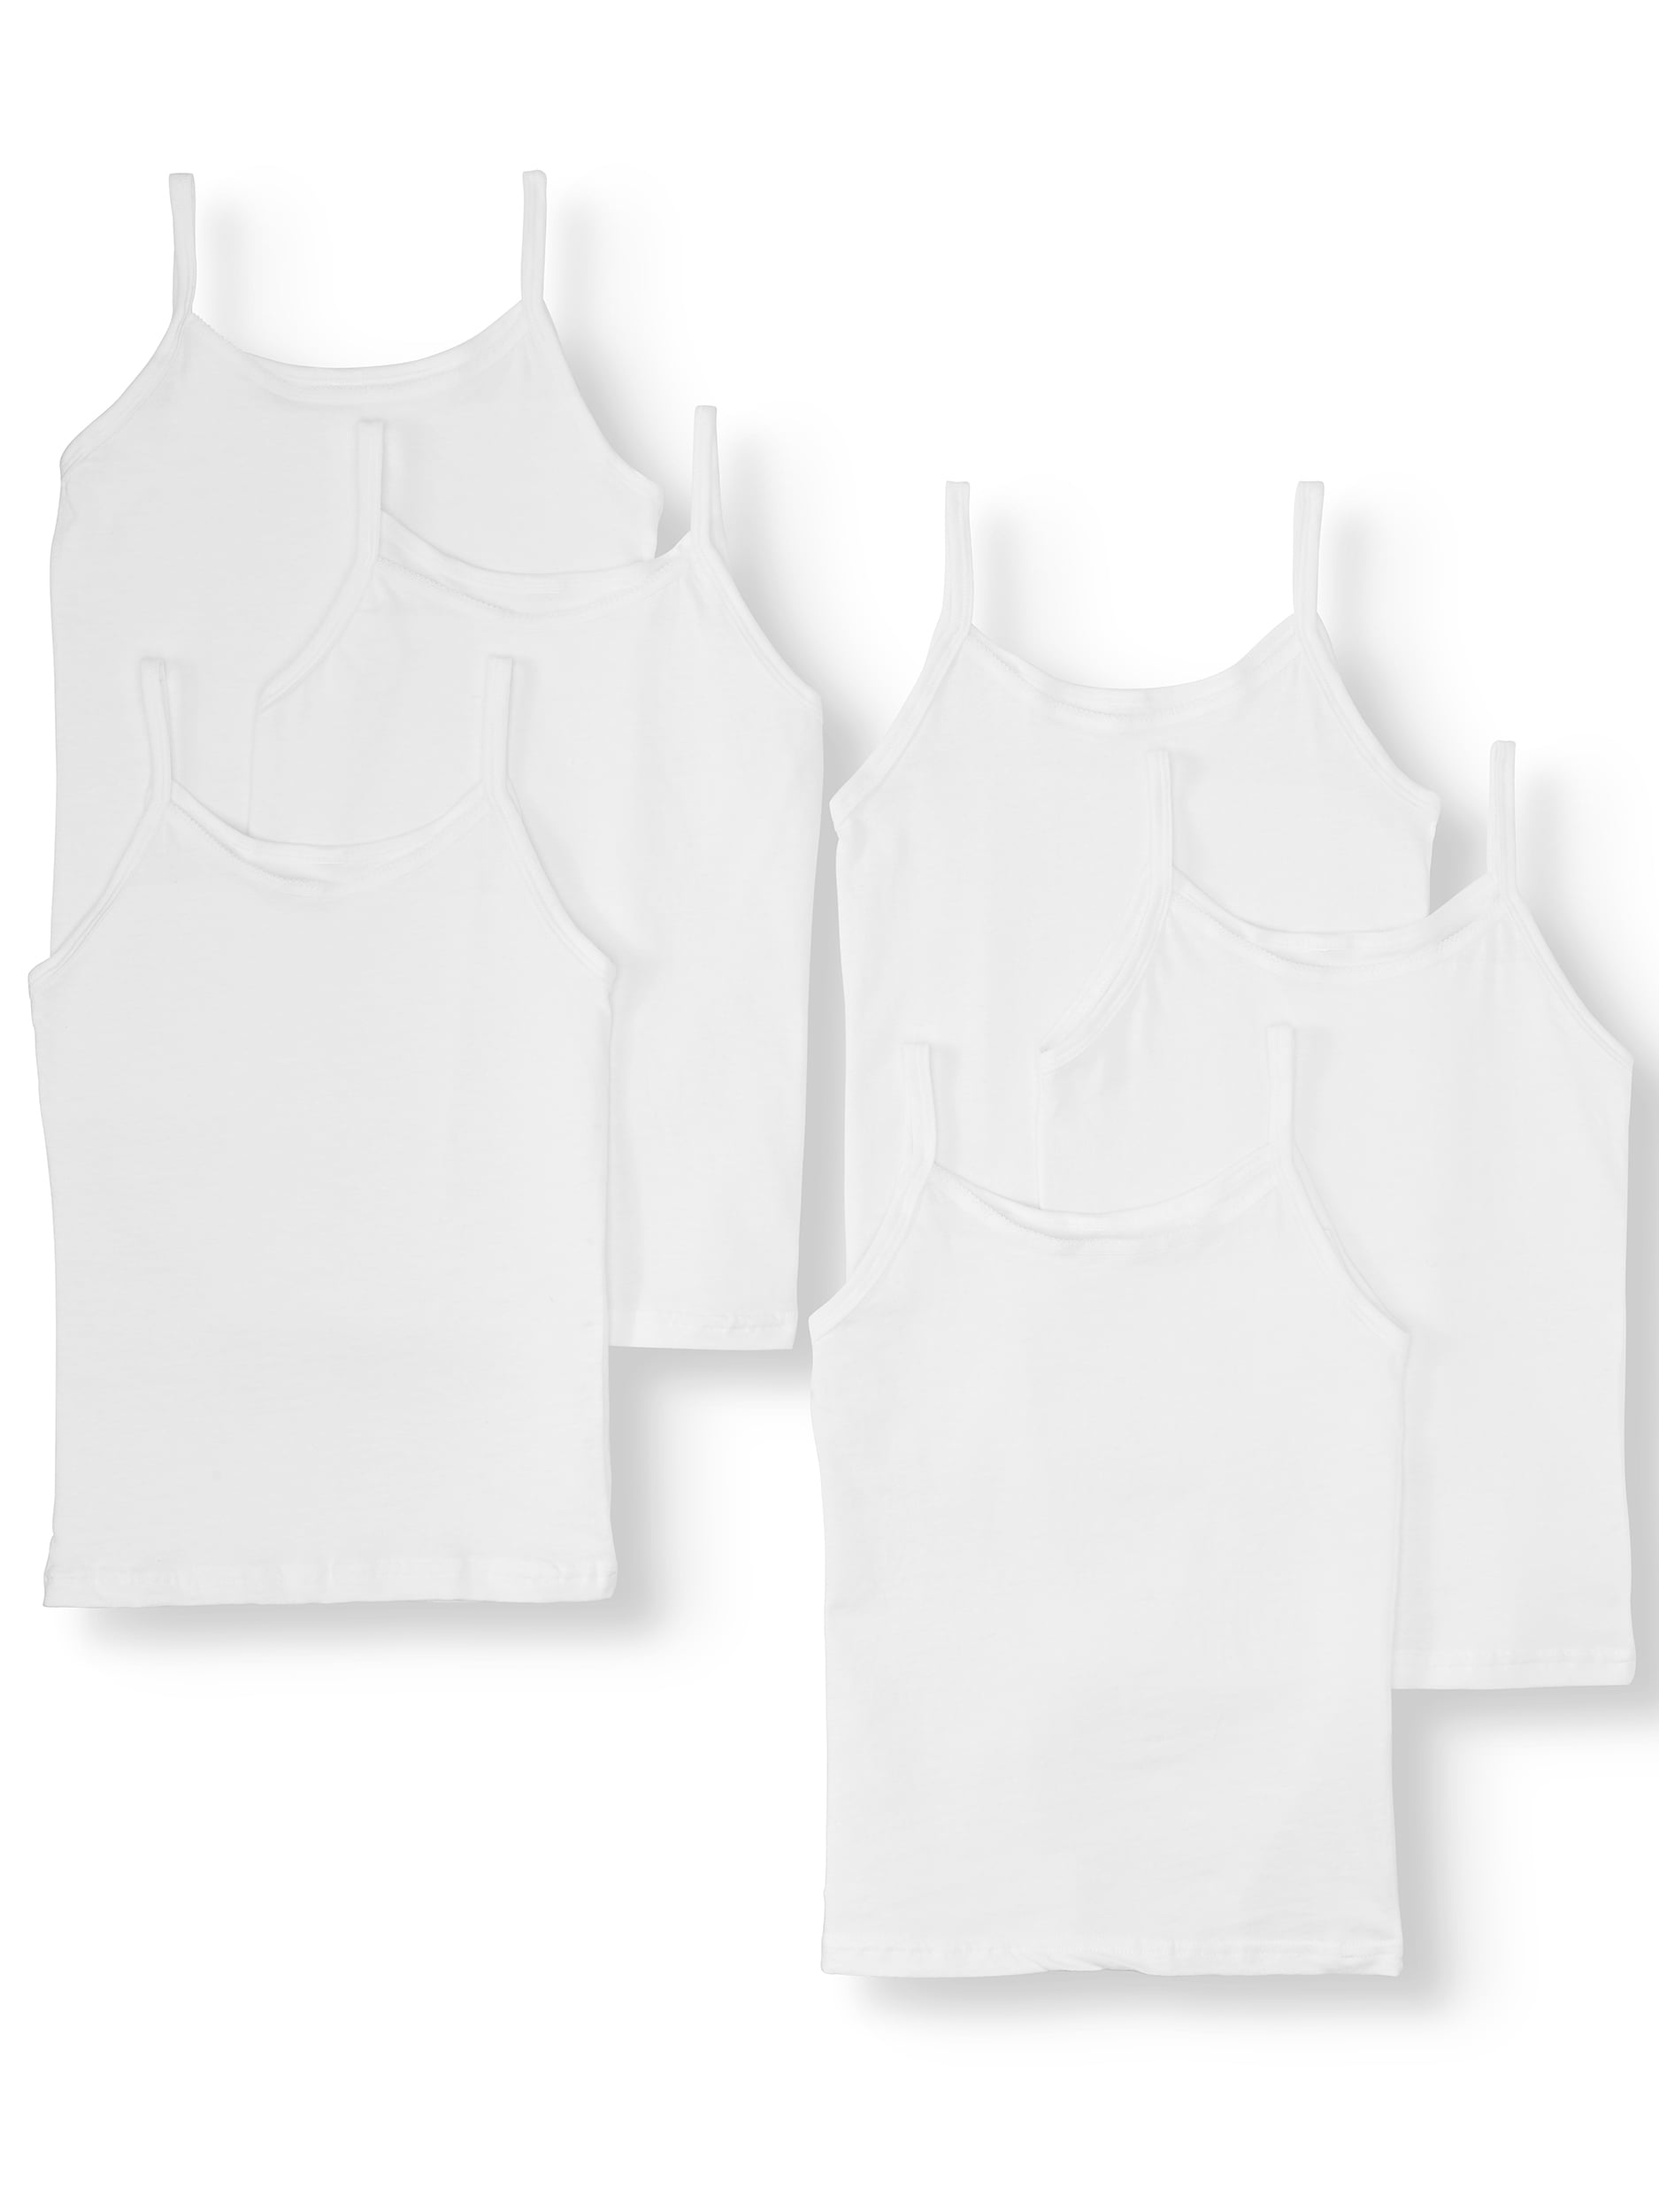 Chili Peppers Girls Camisoles Undershirts, 6-Pack Sizes 4-16 - Walmart.com